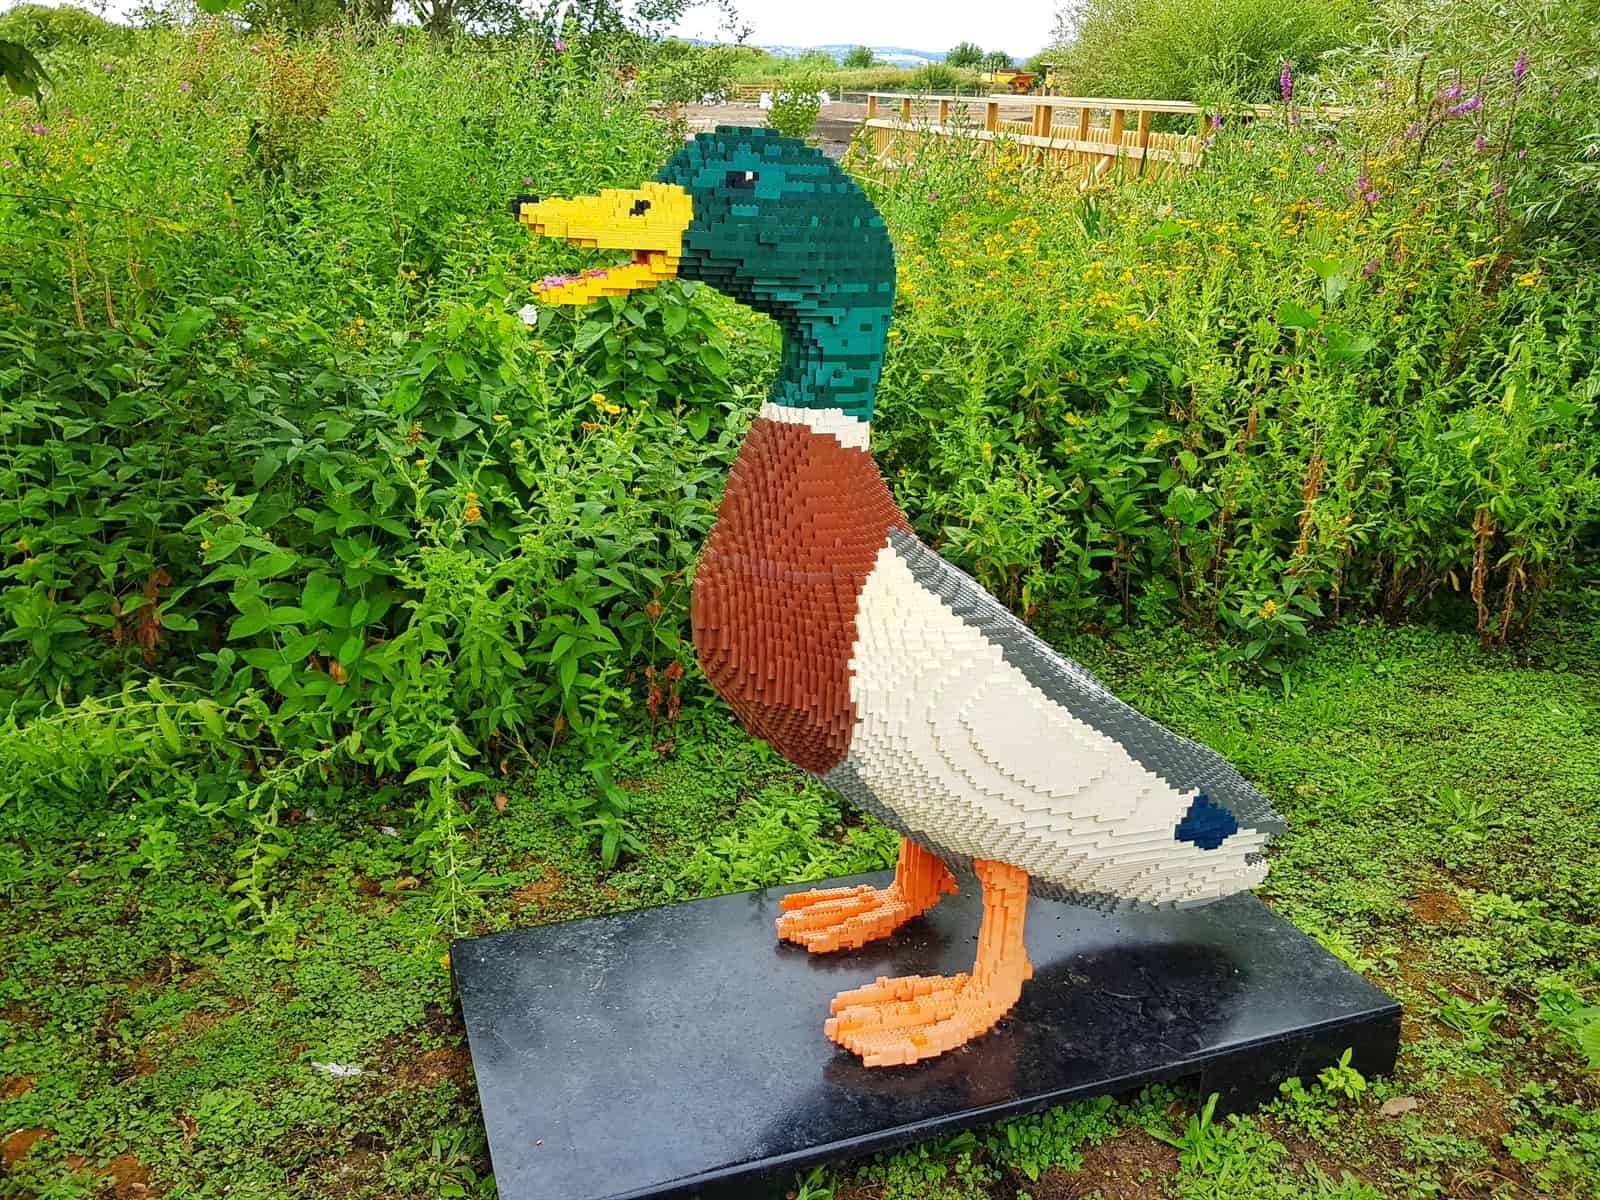 WWT Slimbridge, Gloucestershire - giant lego duck